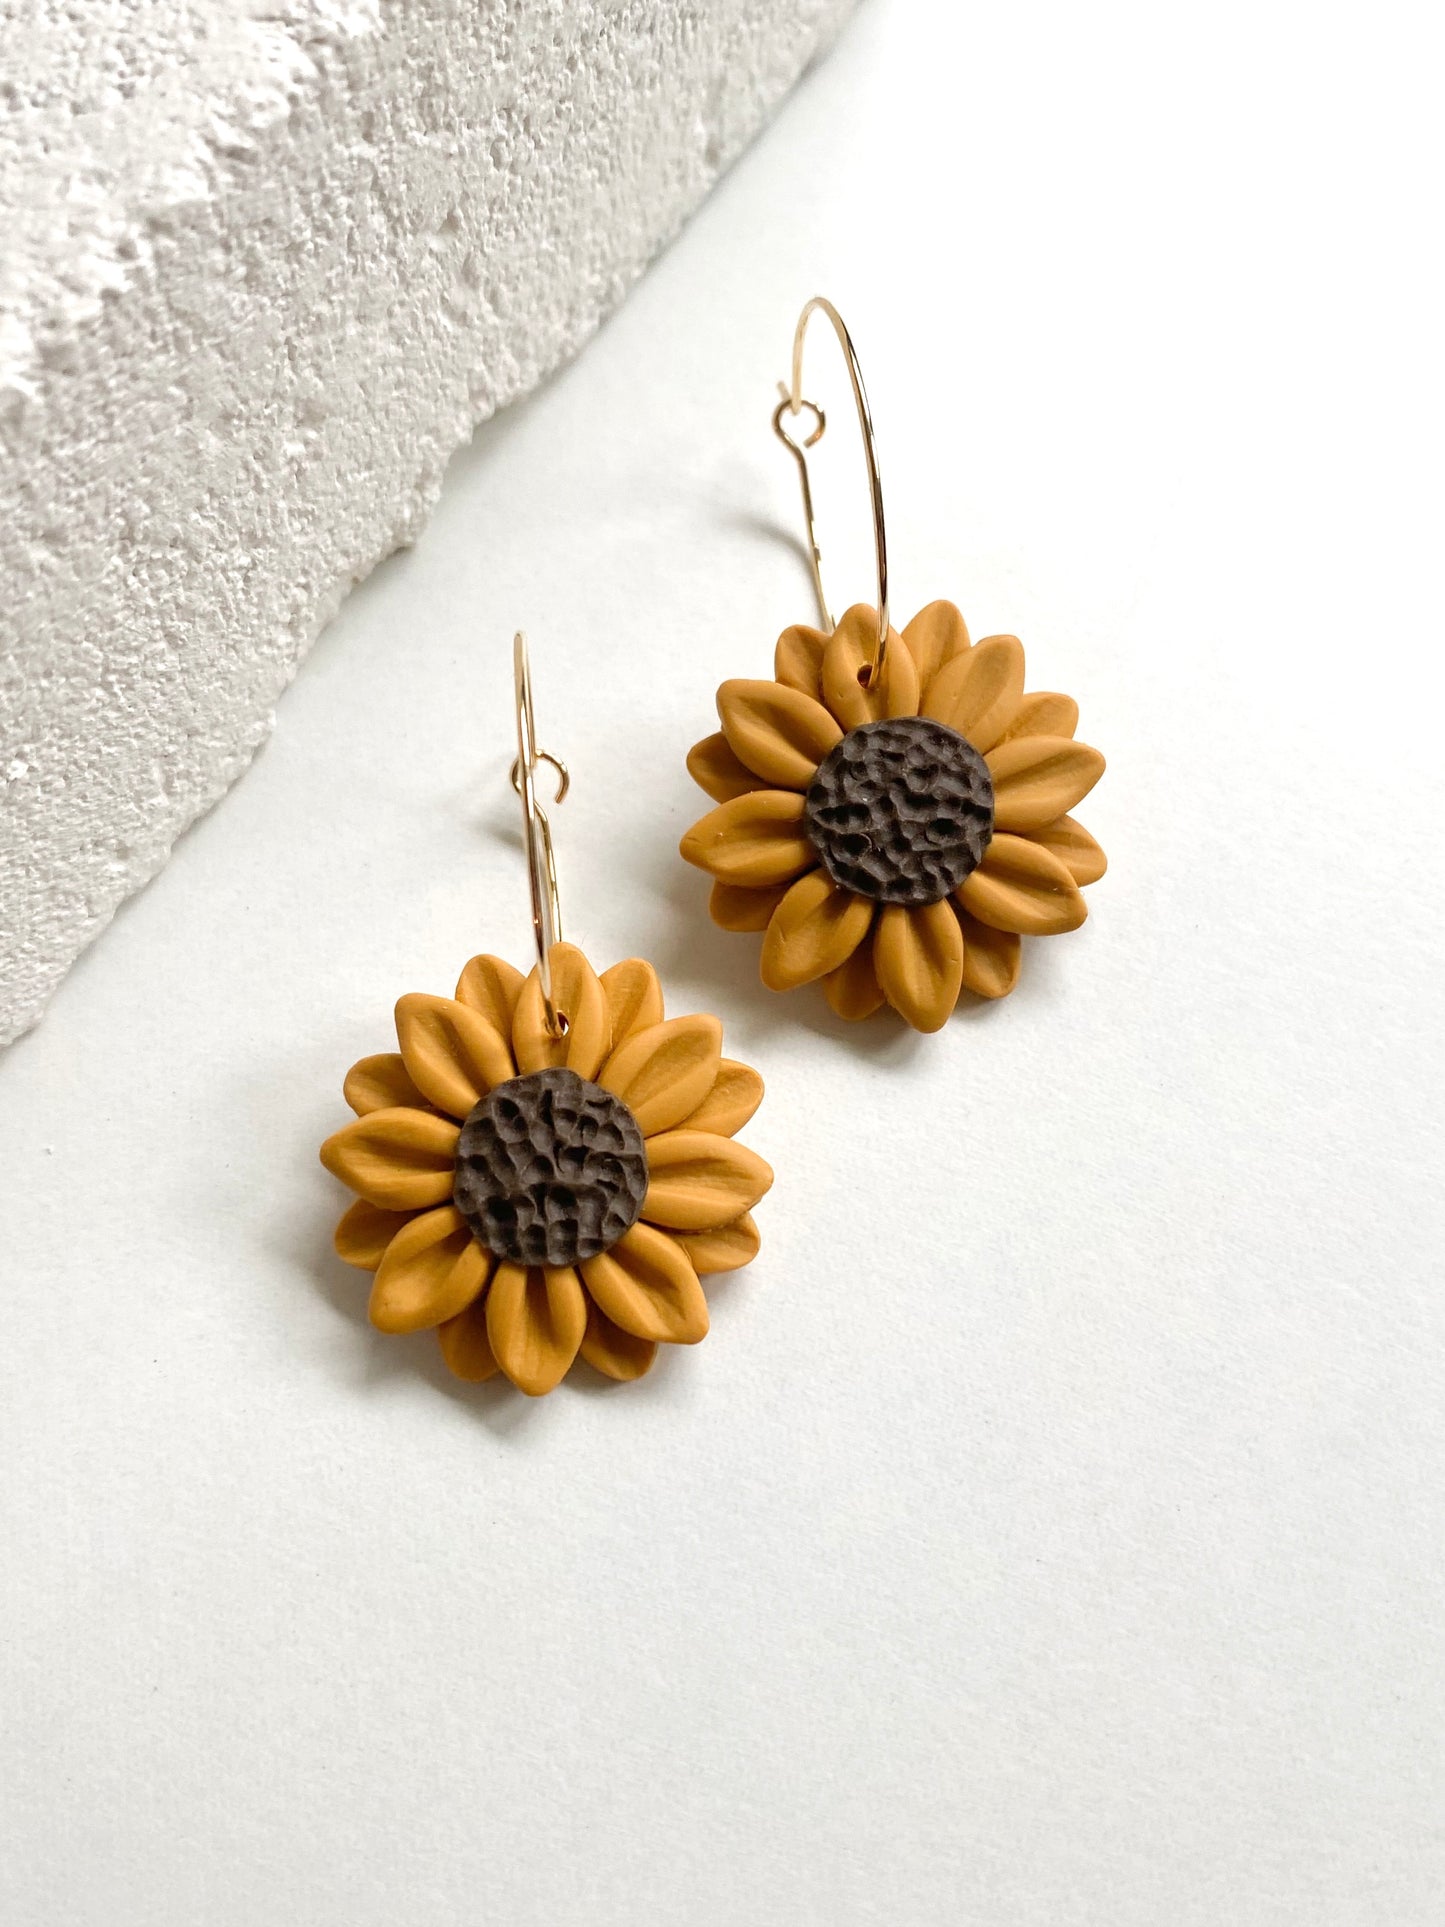 Handmade clay sunflower earrings in 14kt gold filled hoop